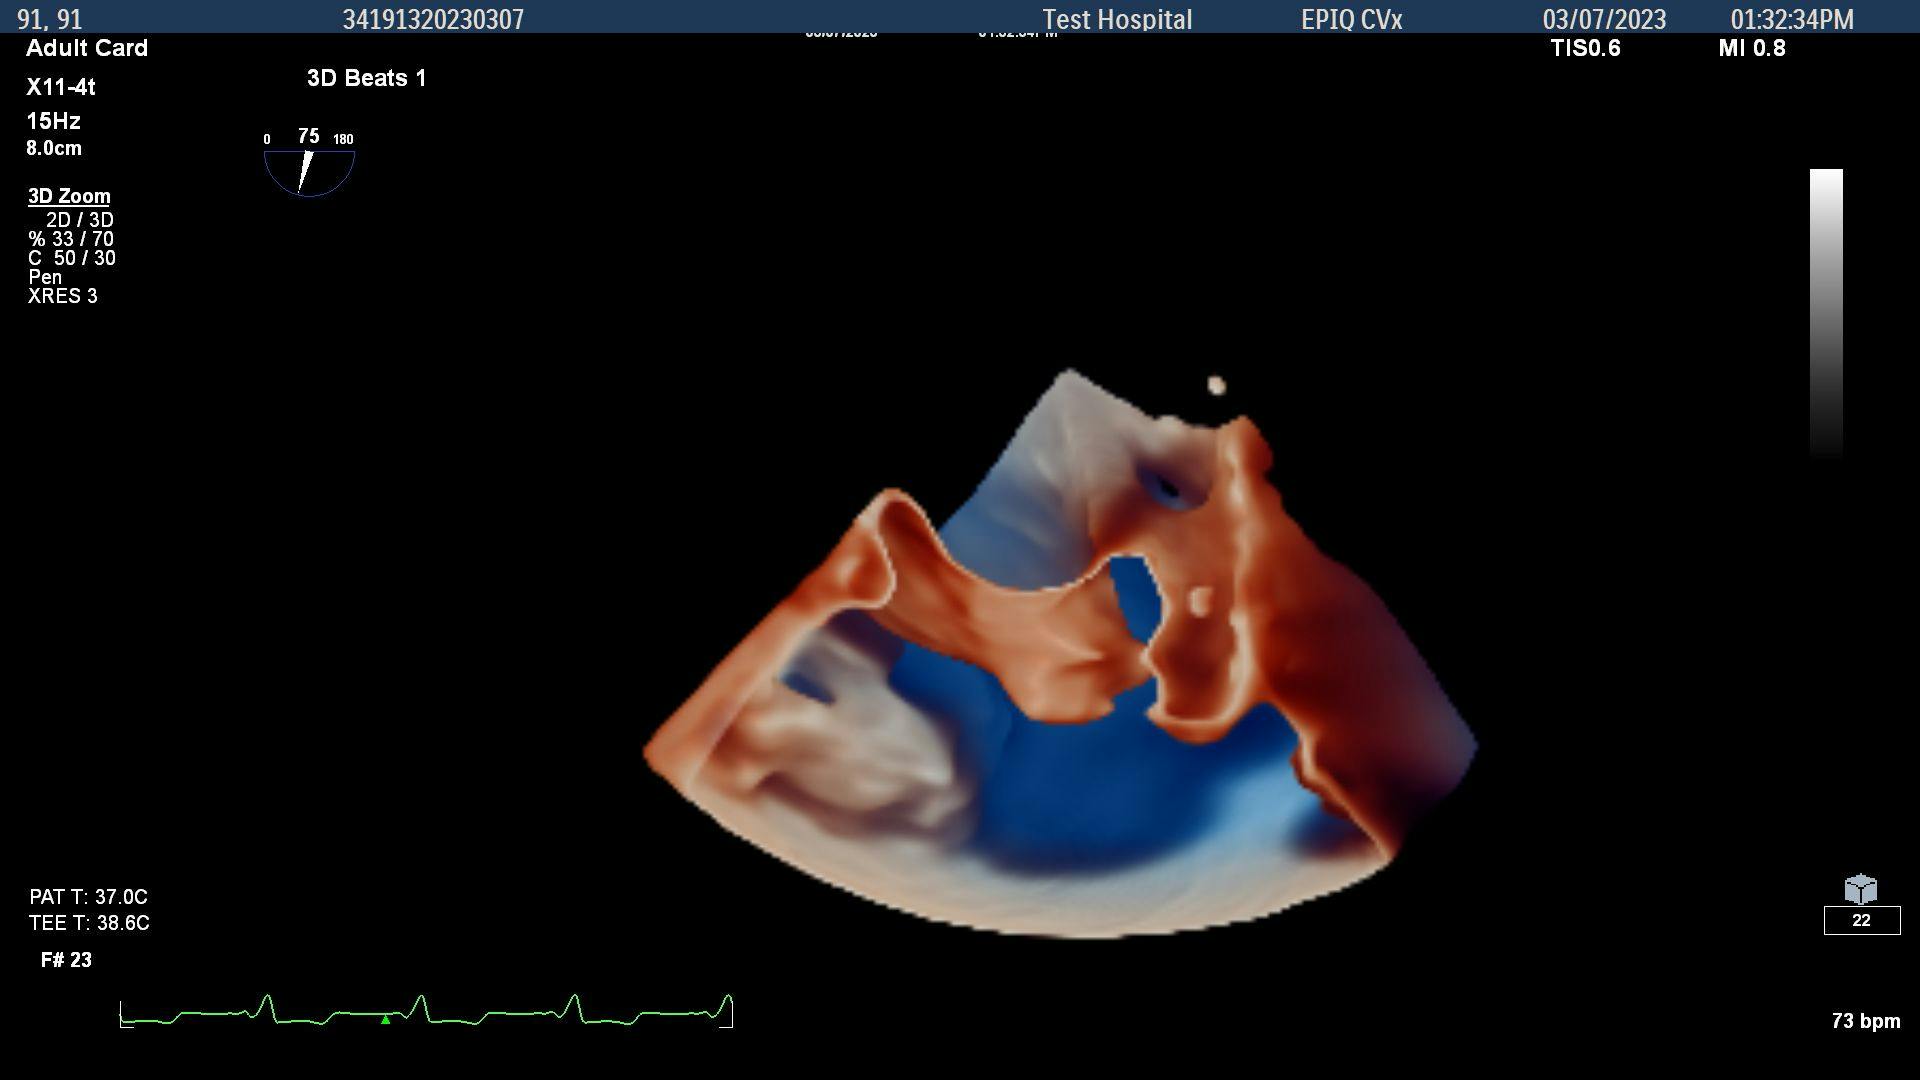 FDA Clears Mini Transesophageal Echocardiography Ultrasound Transducer